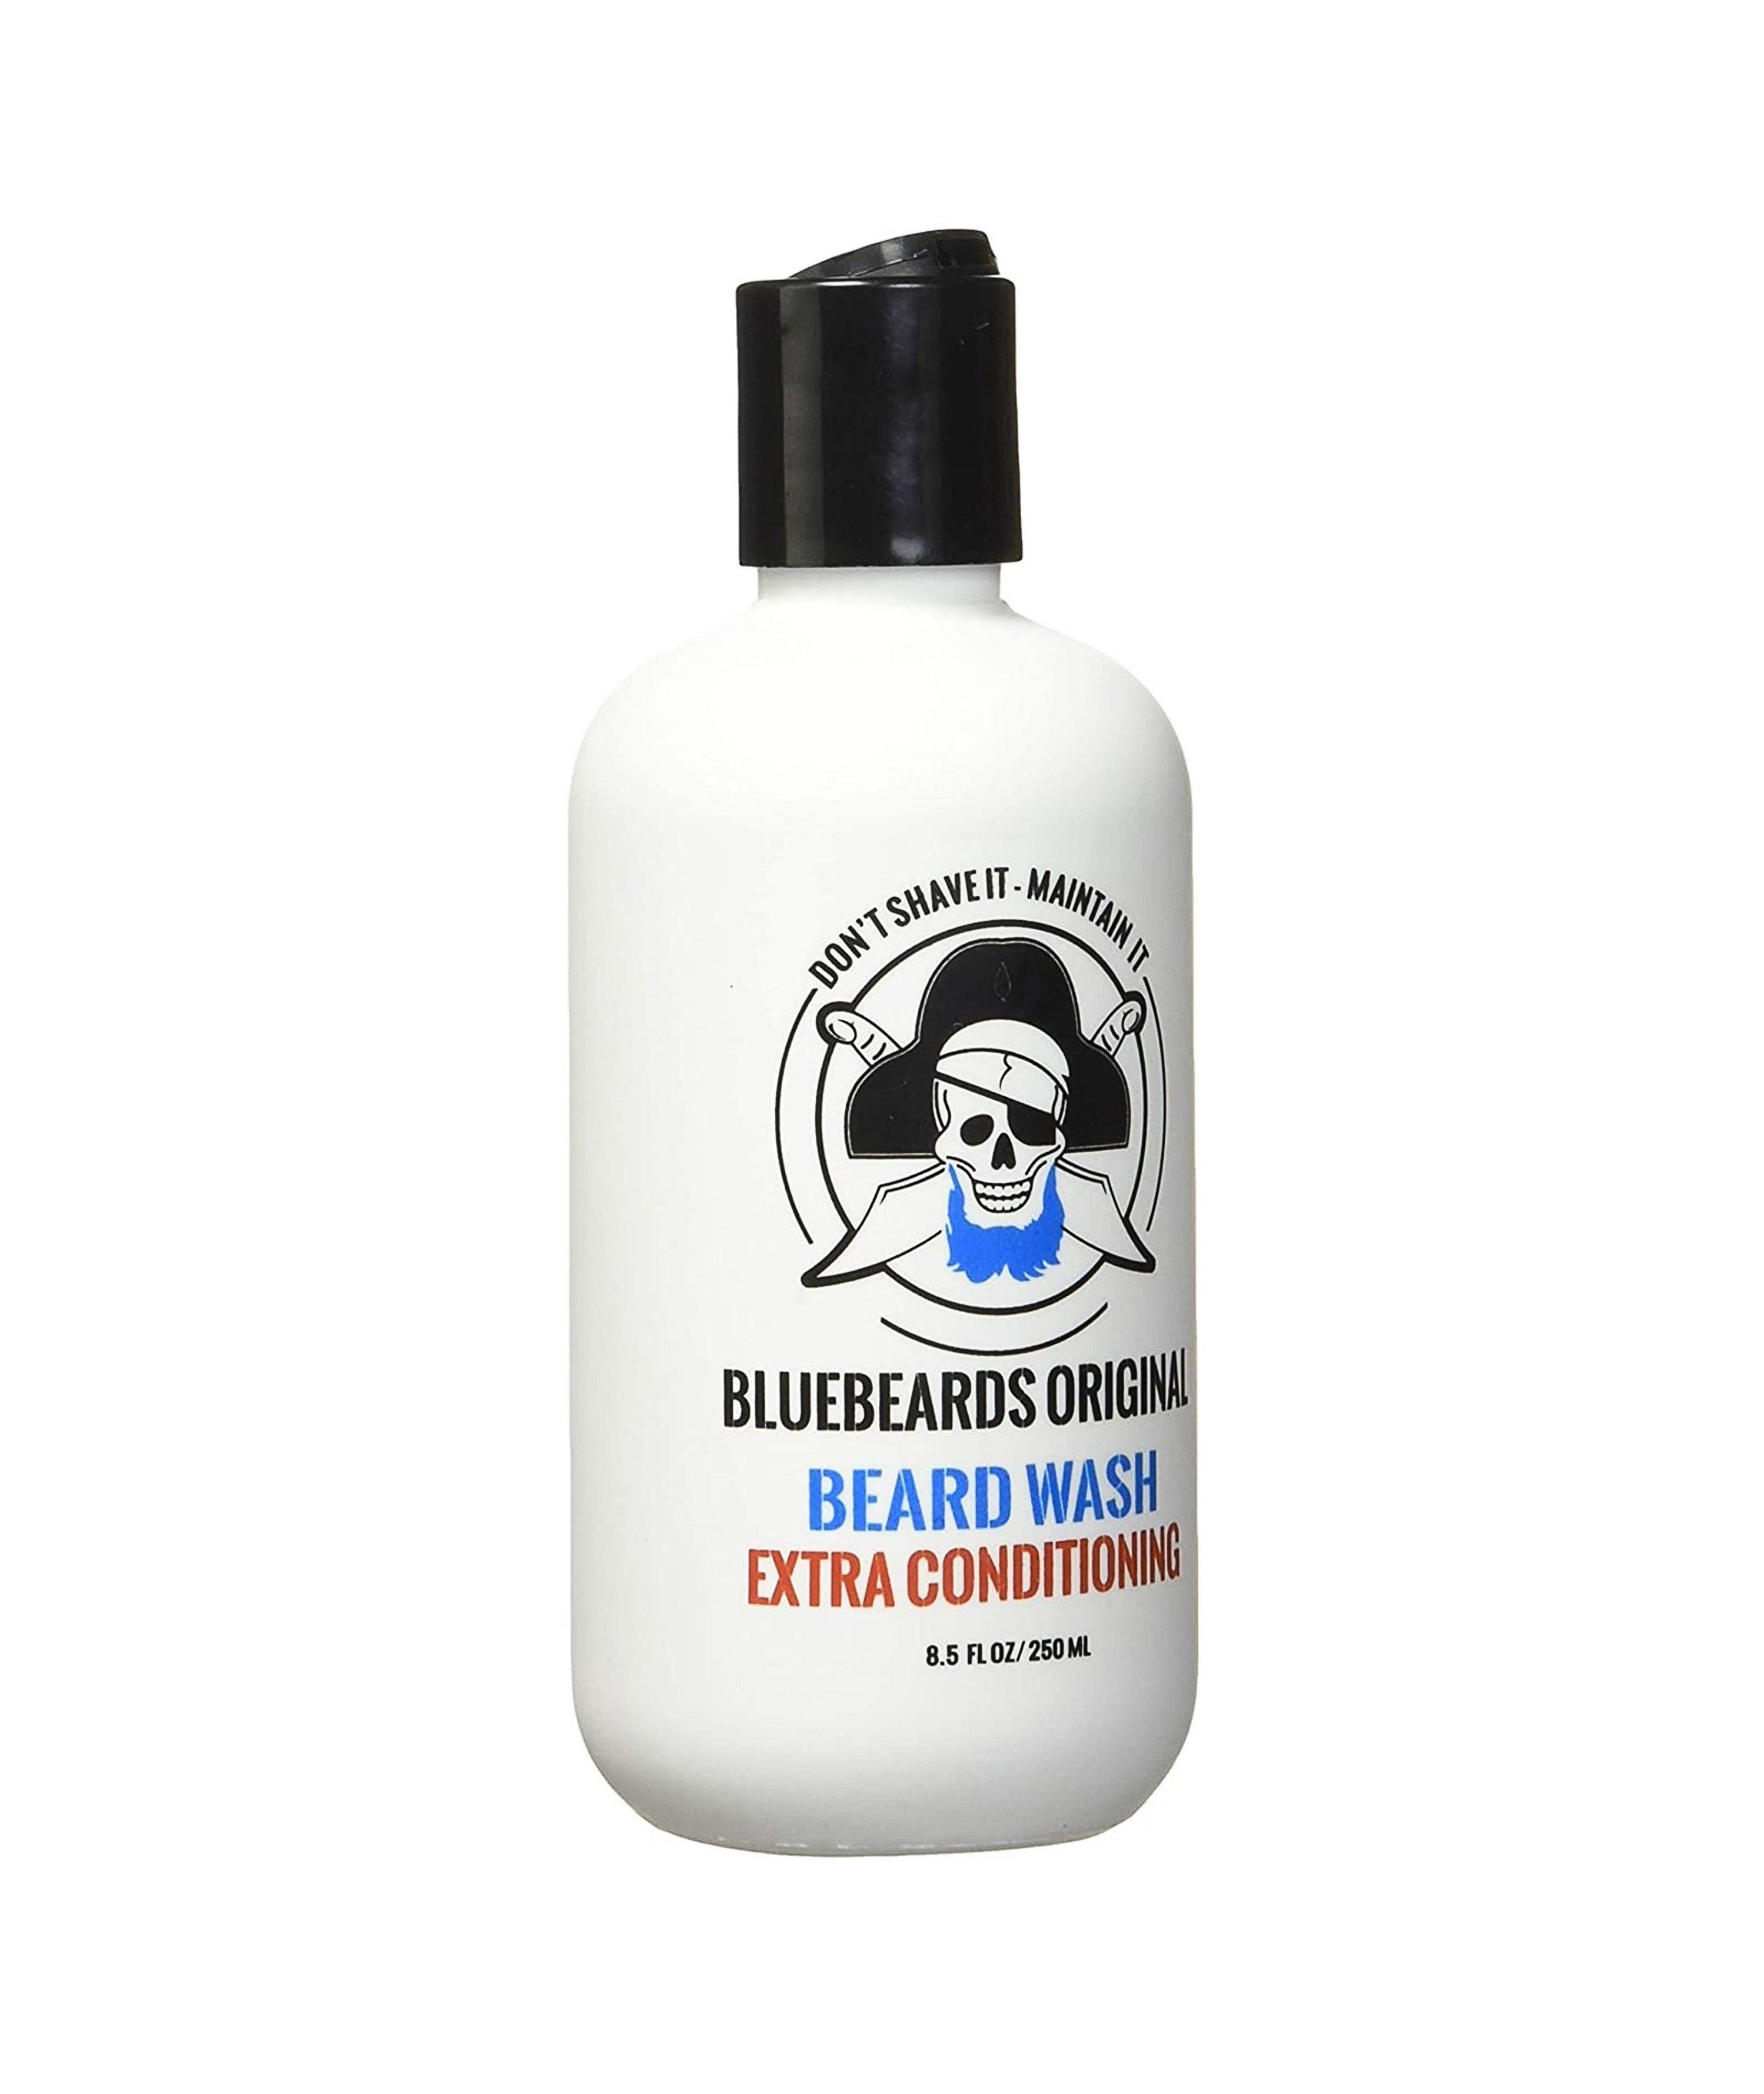 Bluebeards Original Beard Wash  image 0